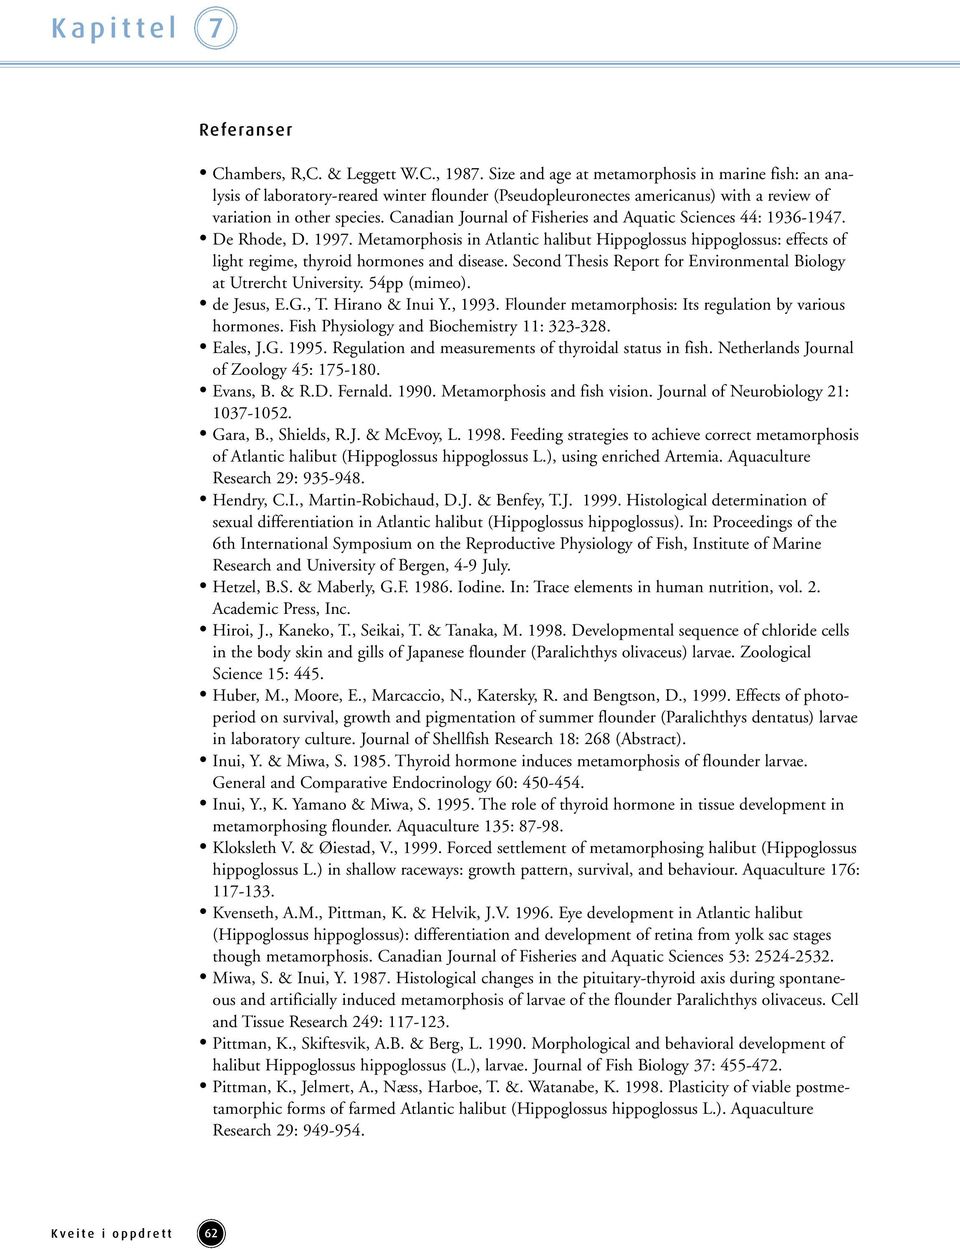 Canadian Journal of Fisheries and Aquatic Sciences 44: 1936-1947. De Rhode, D. 1997. Metamorphosis in Atlantic halibut Hippoglossus hippoglossus: effects of light regime, thyroid hormones and disease.